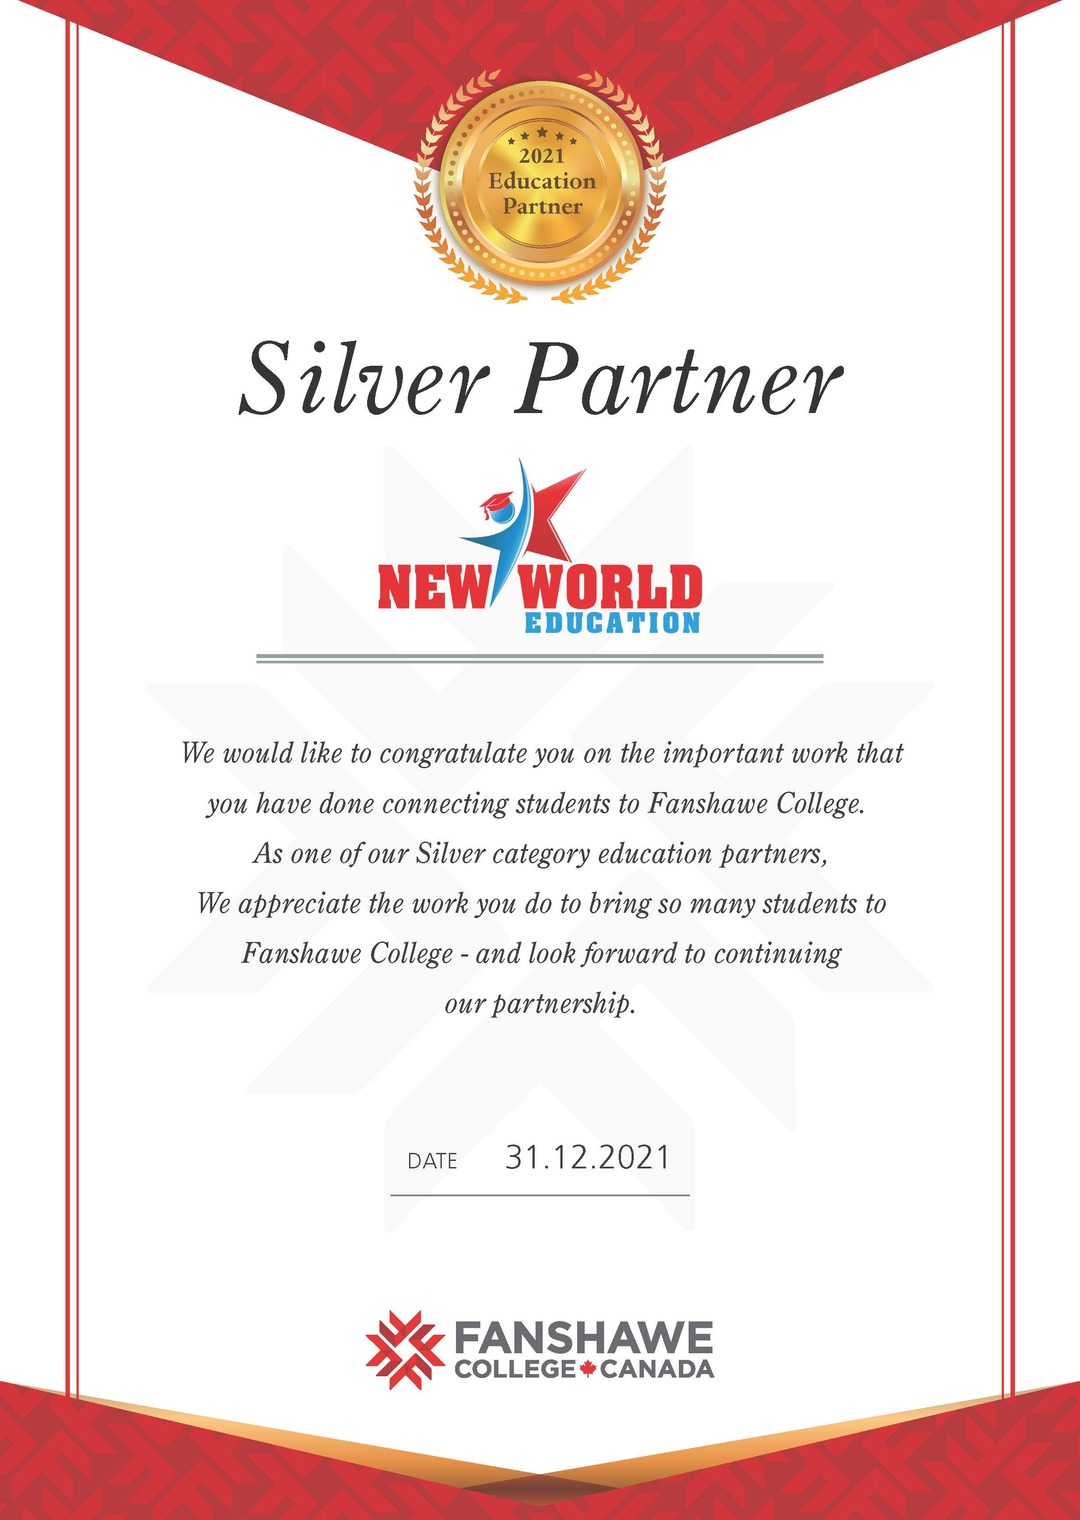 Silver Parner 2021 of Fanshawe College, Canada